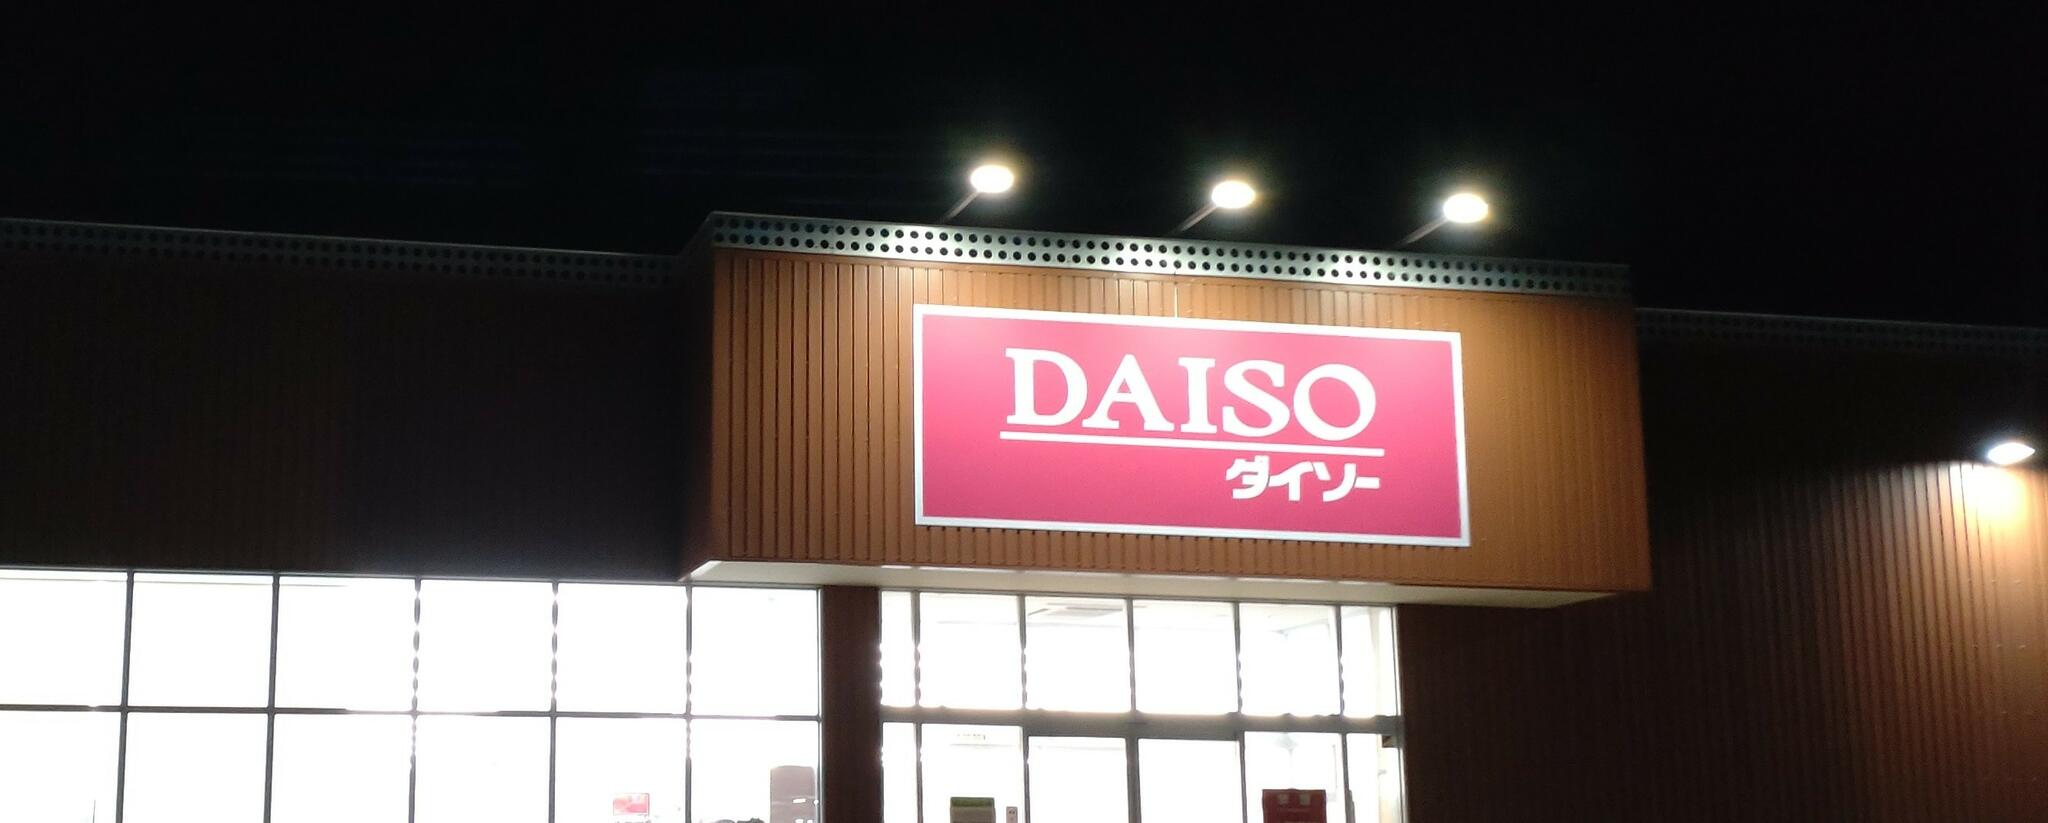 DAISO コープさっぽろふかがわ店の代表写真1